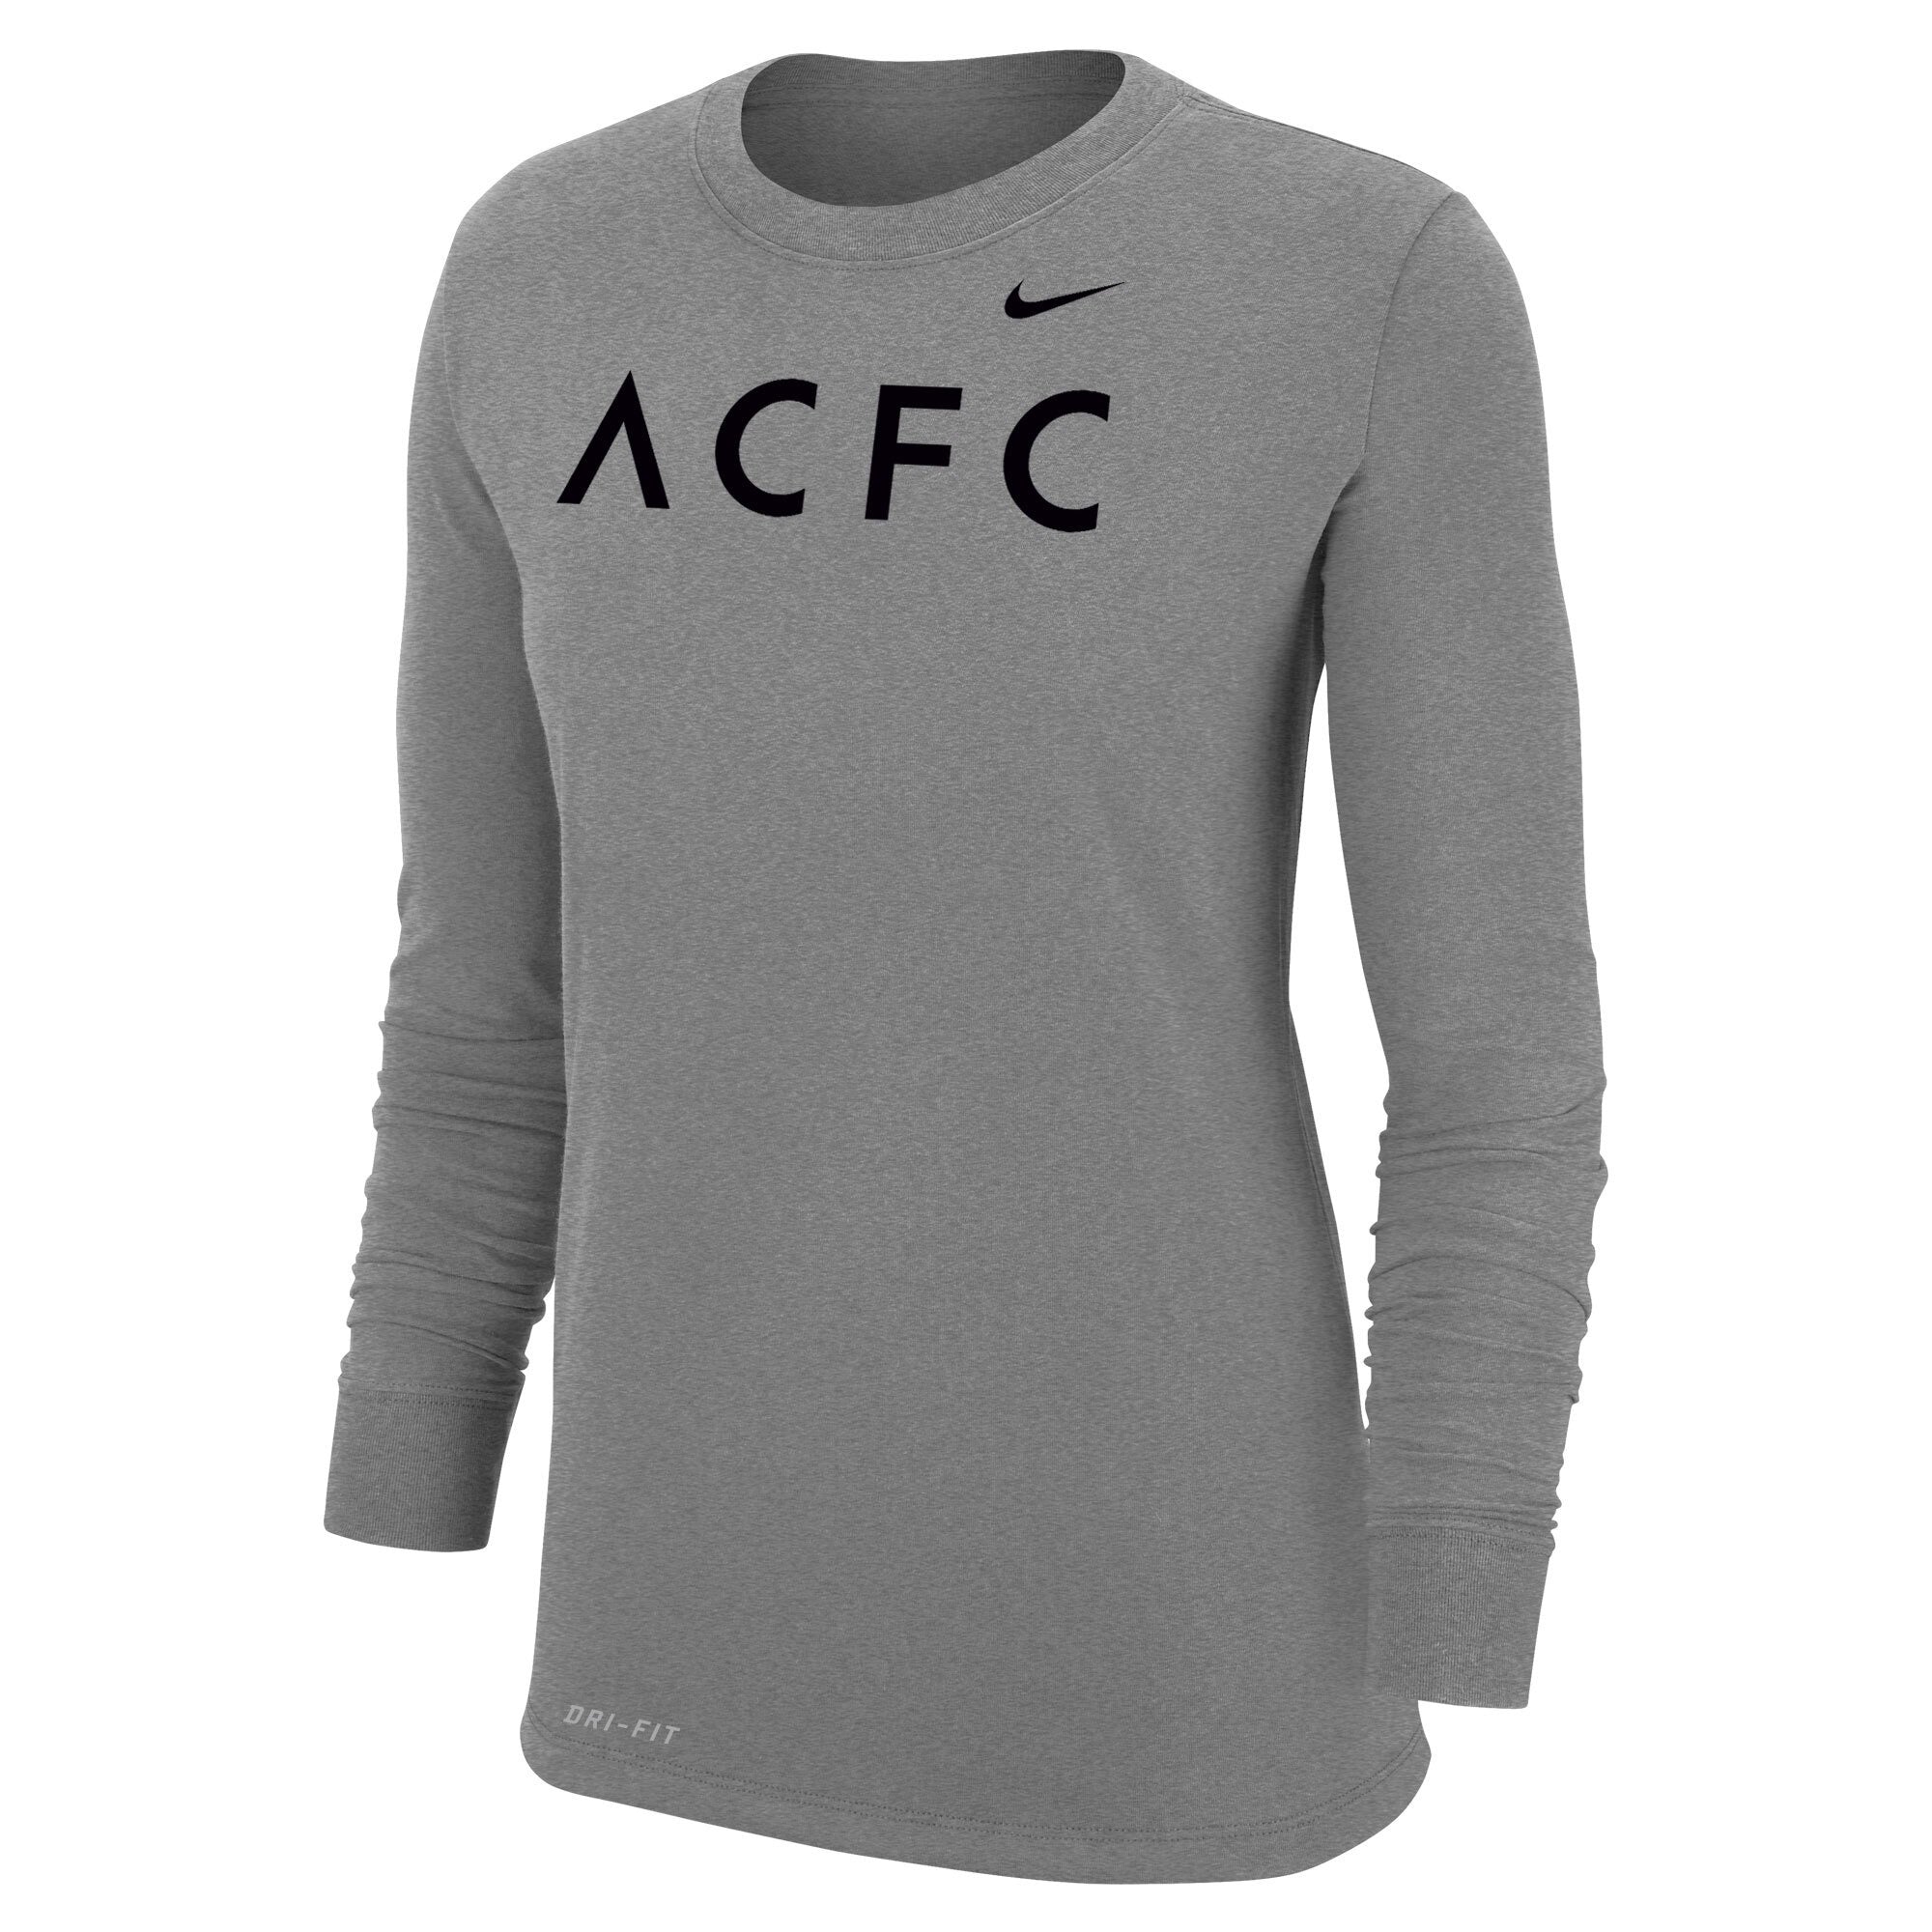 Camiseta Nike Dri-FIT de manga larga gris para mujer ACFC